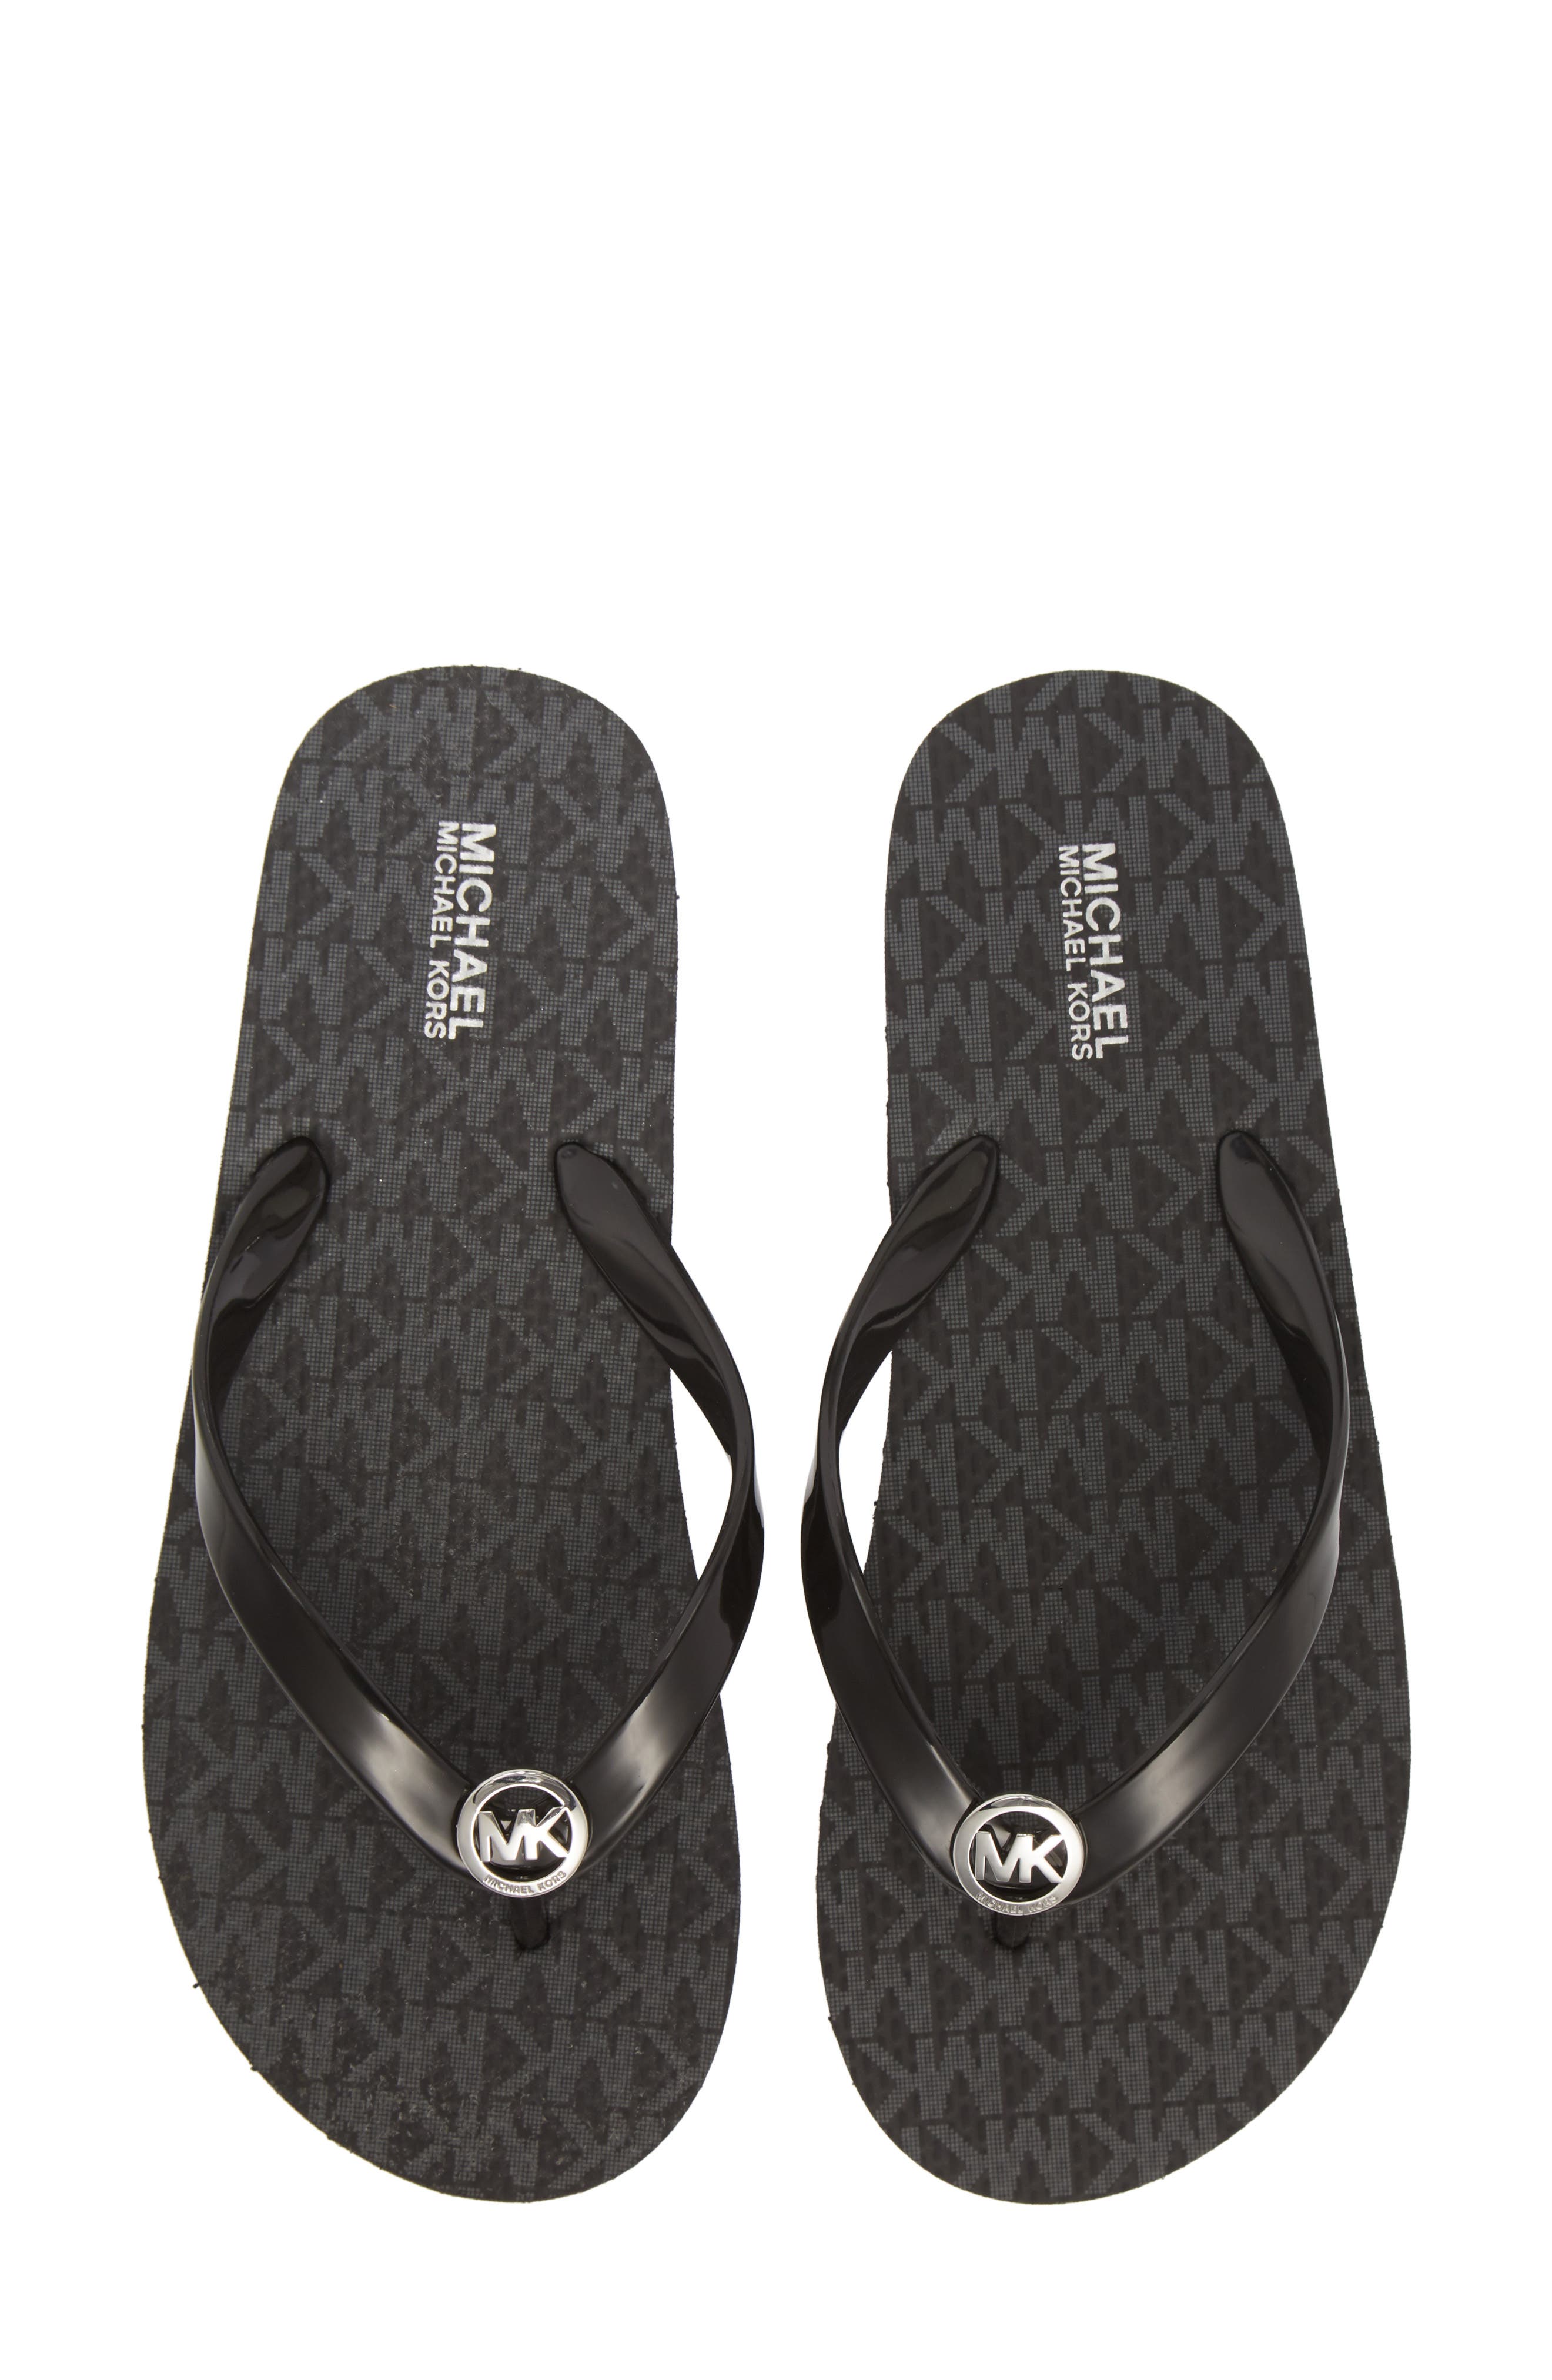 michael kors black and white sandals